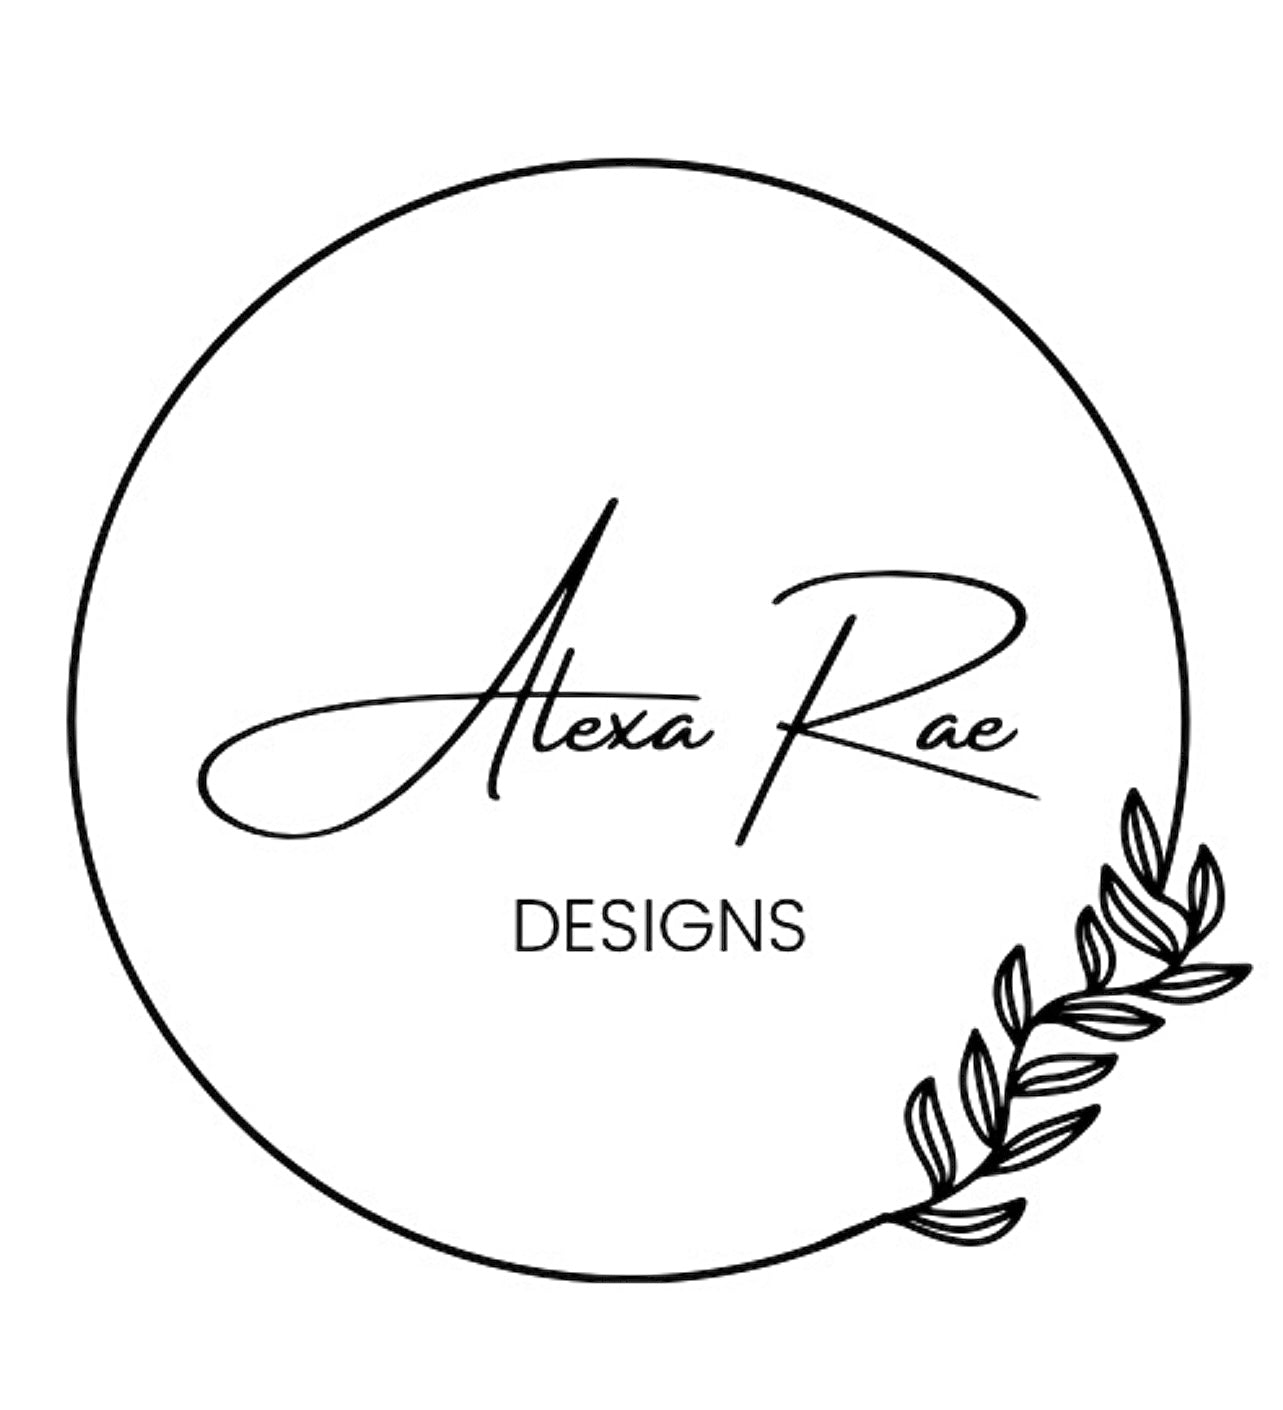 Alexa Rae Designs